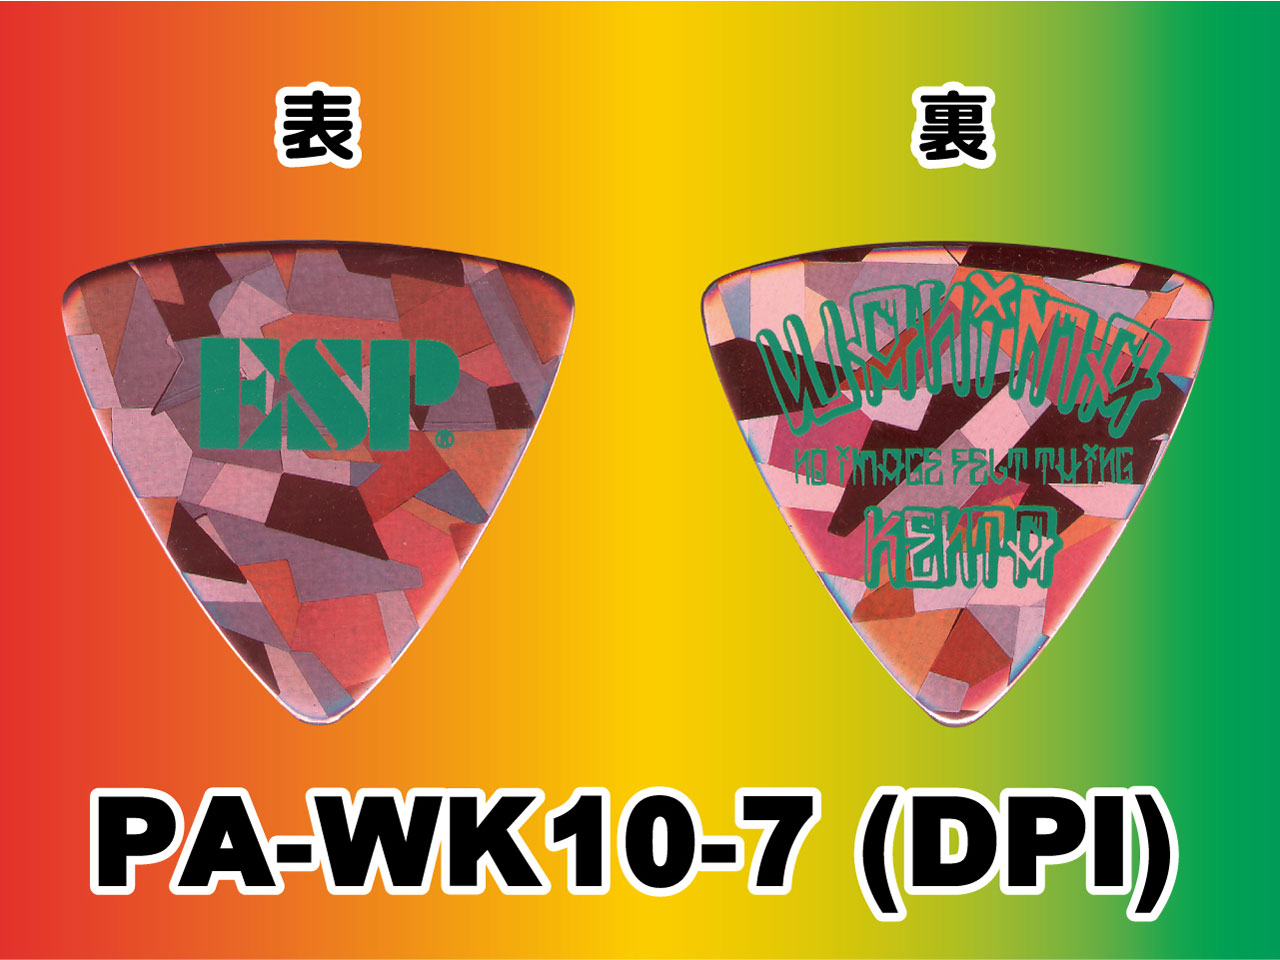 ESP(イーエスピー) Artist Pick Series KENTA Pick フルセット全8種 (WANIMA/KENTA Model)